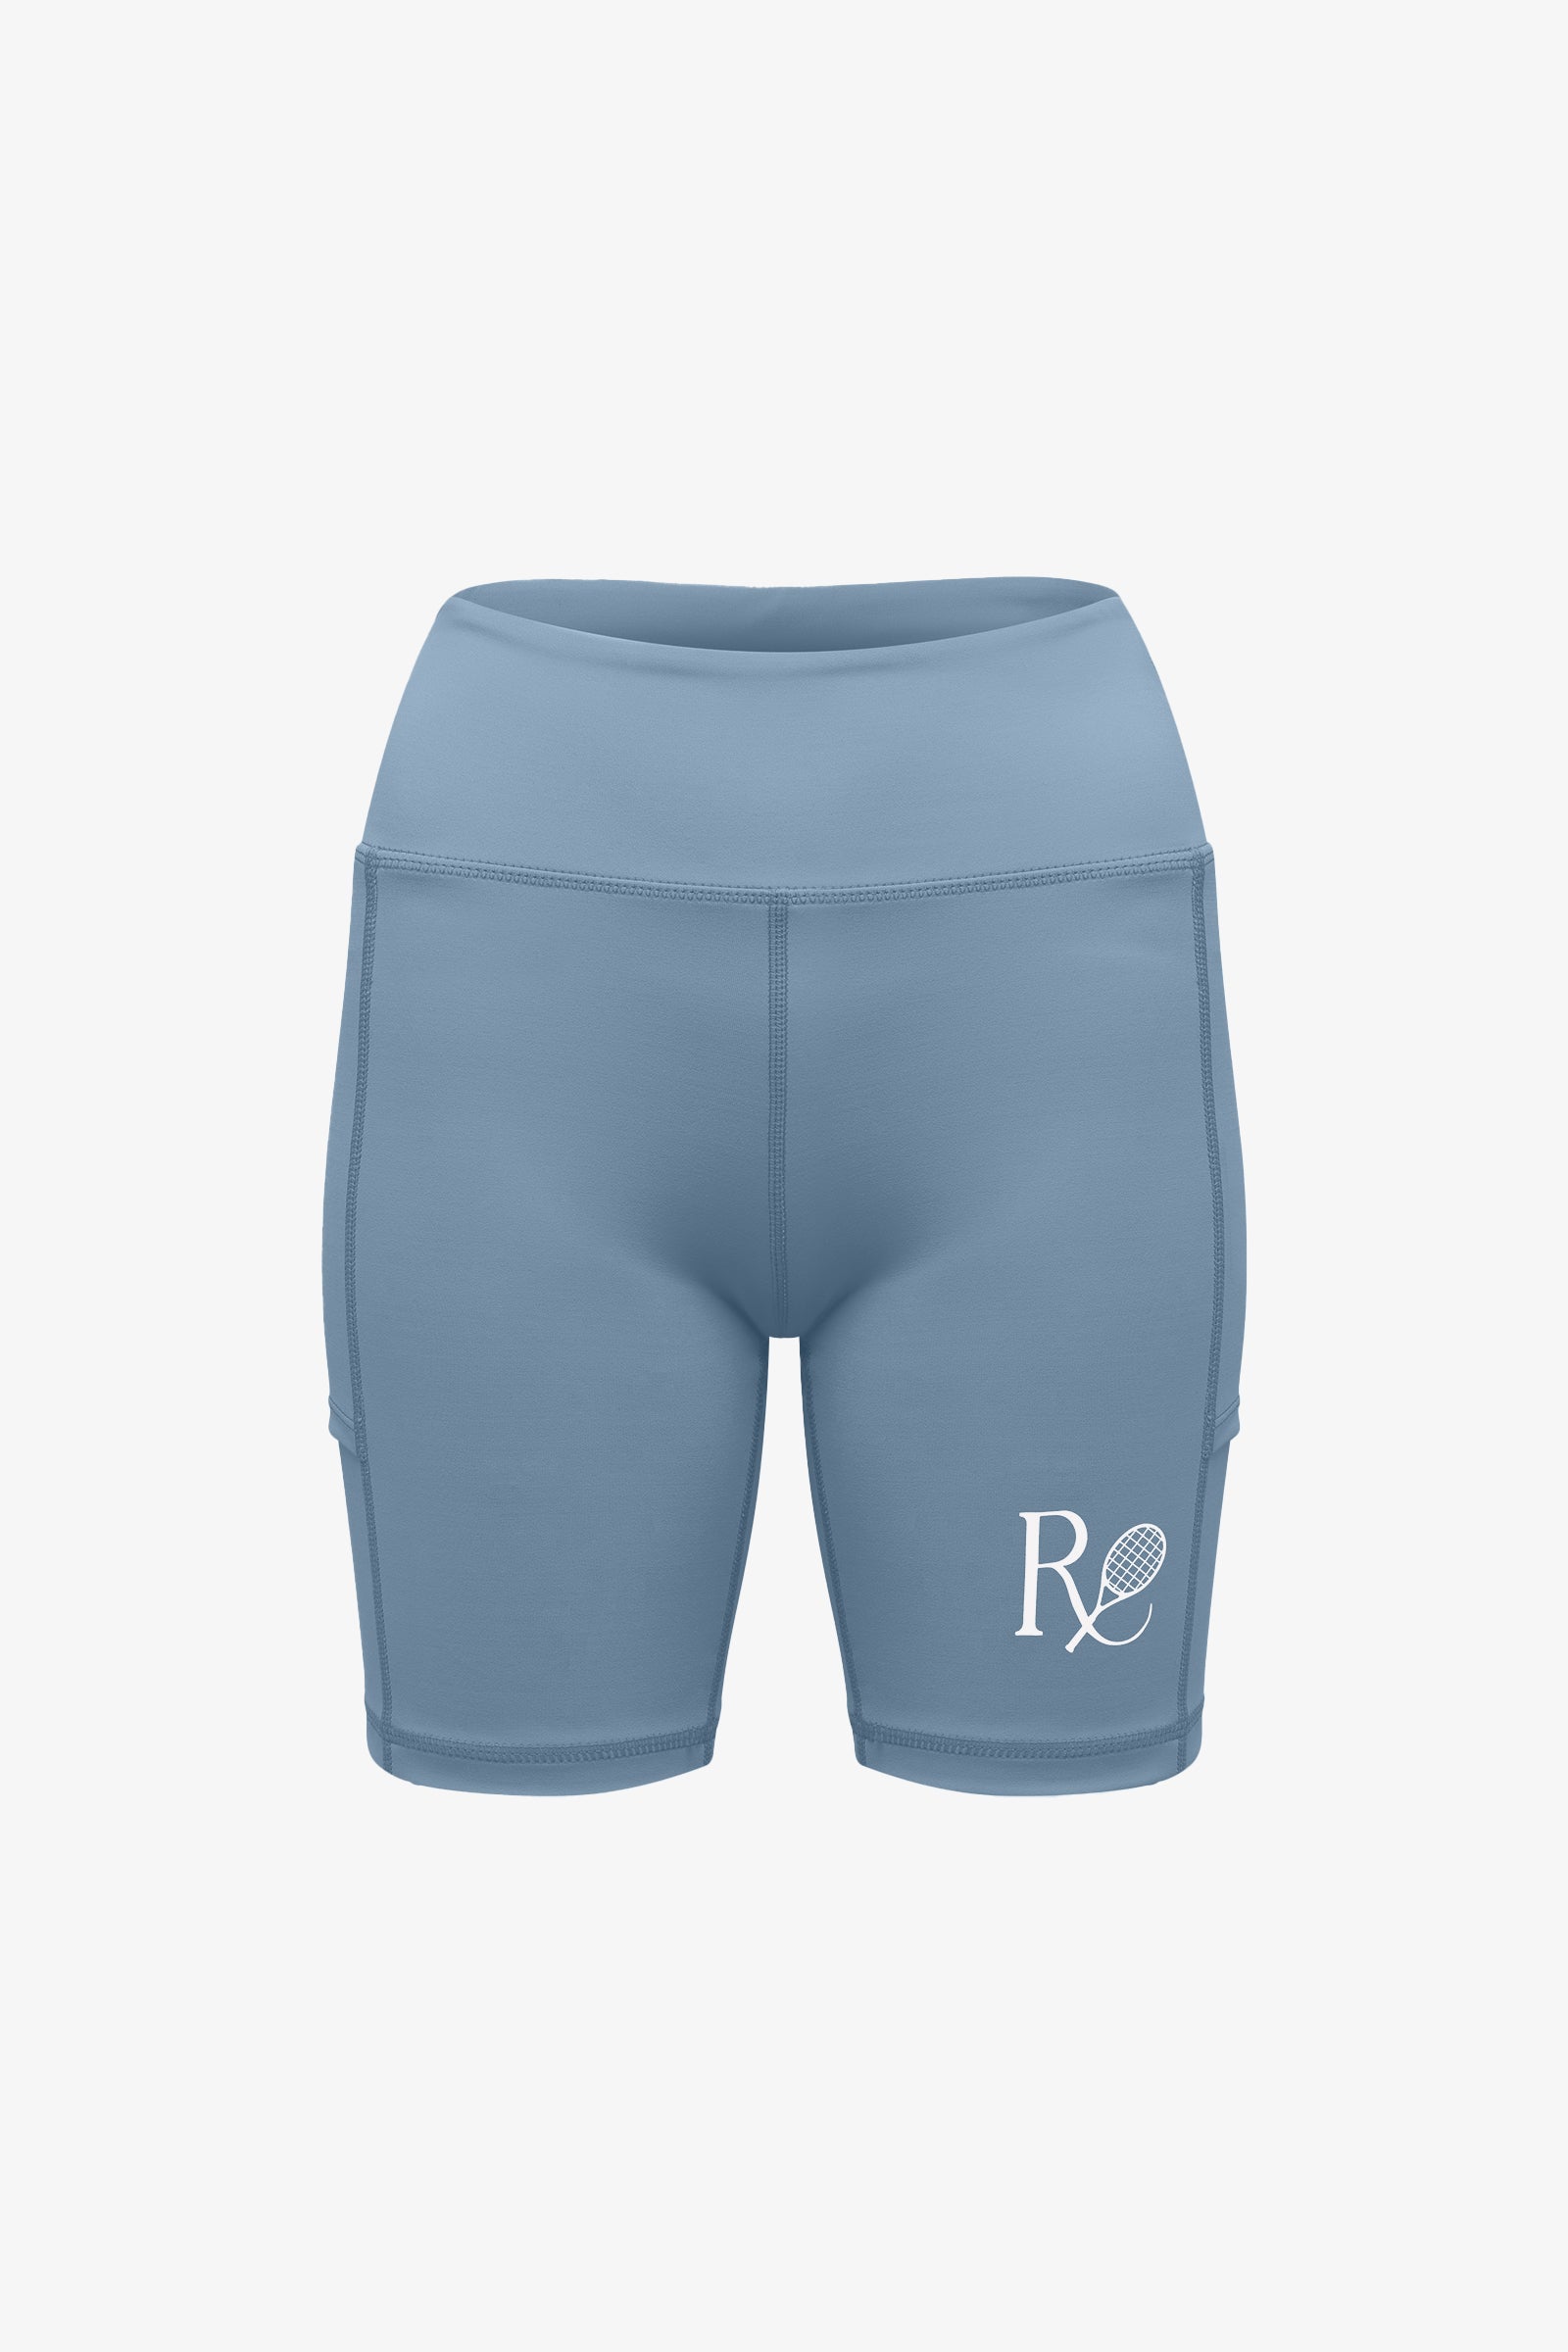 Ball Pocket Biker Shorts / Oxford Blue